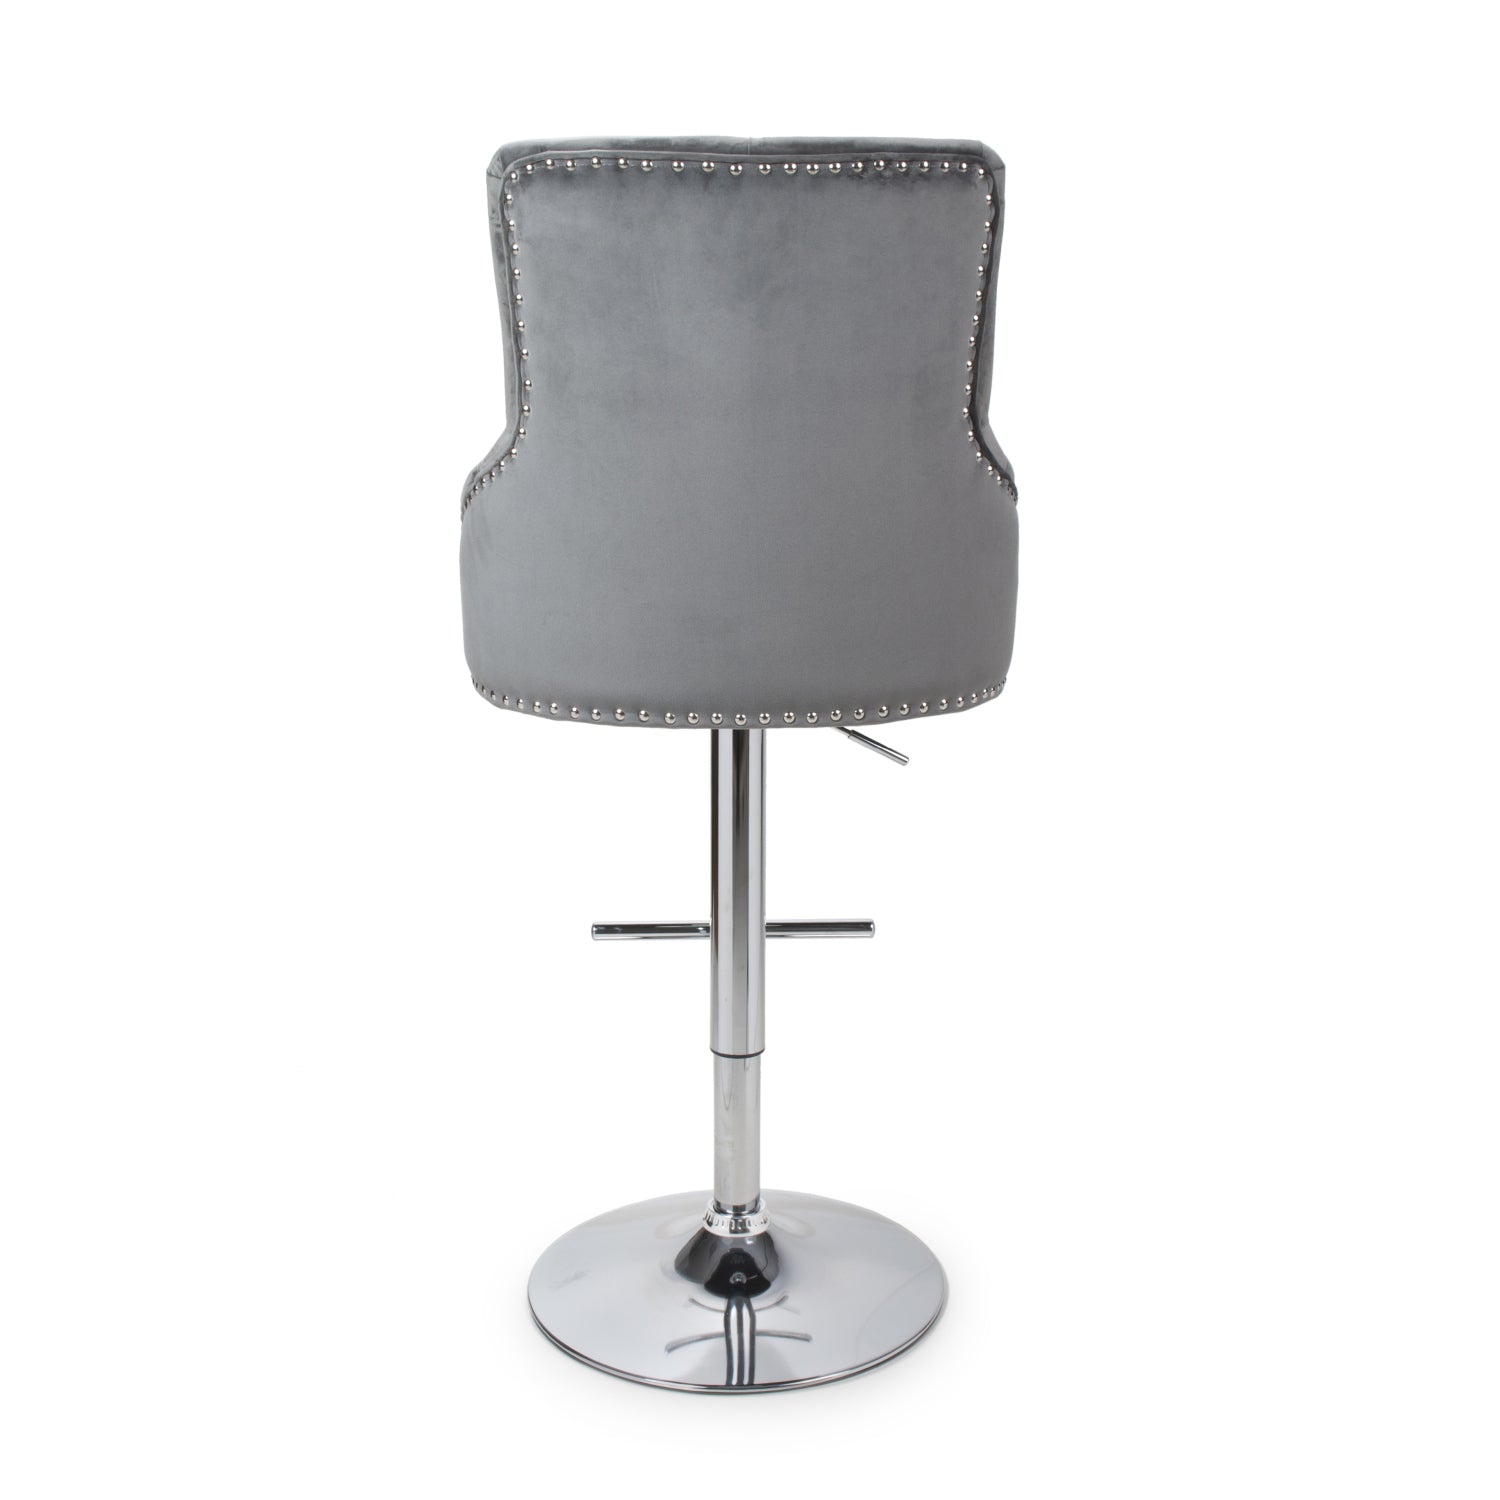 Rocco brush velvet adjustable bar stools from Top Secret Furniture